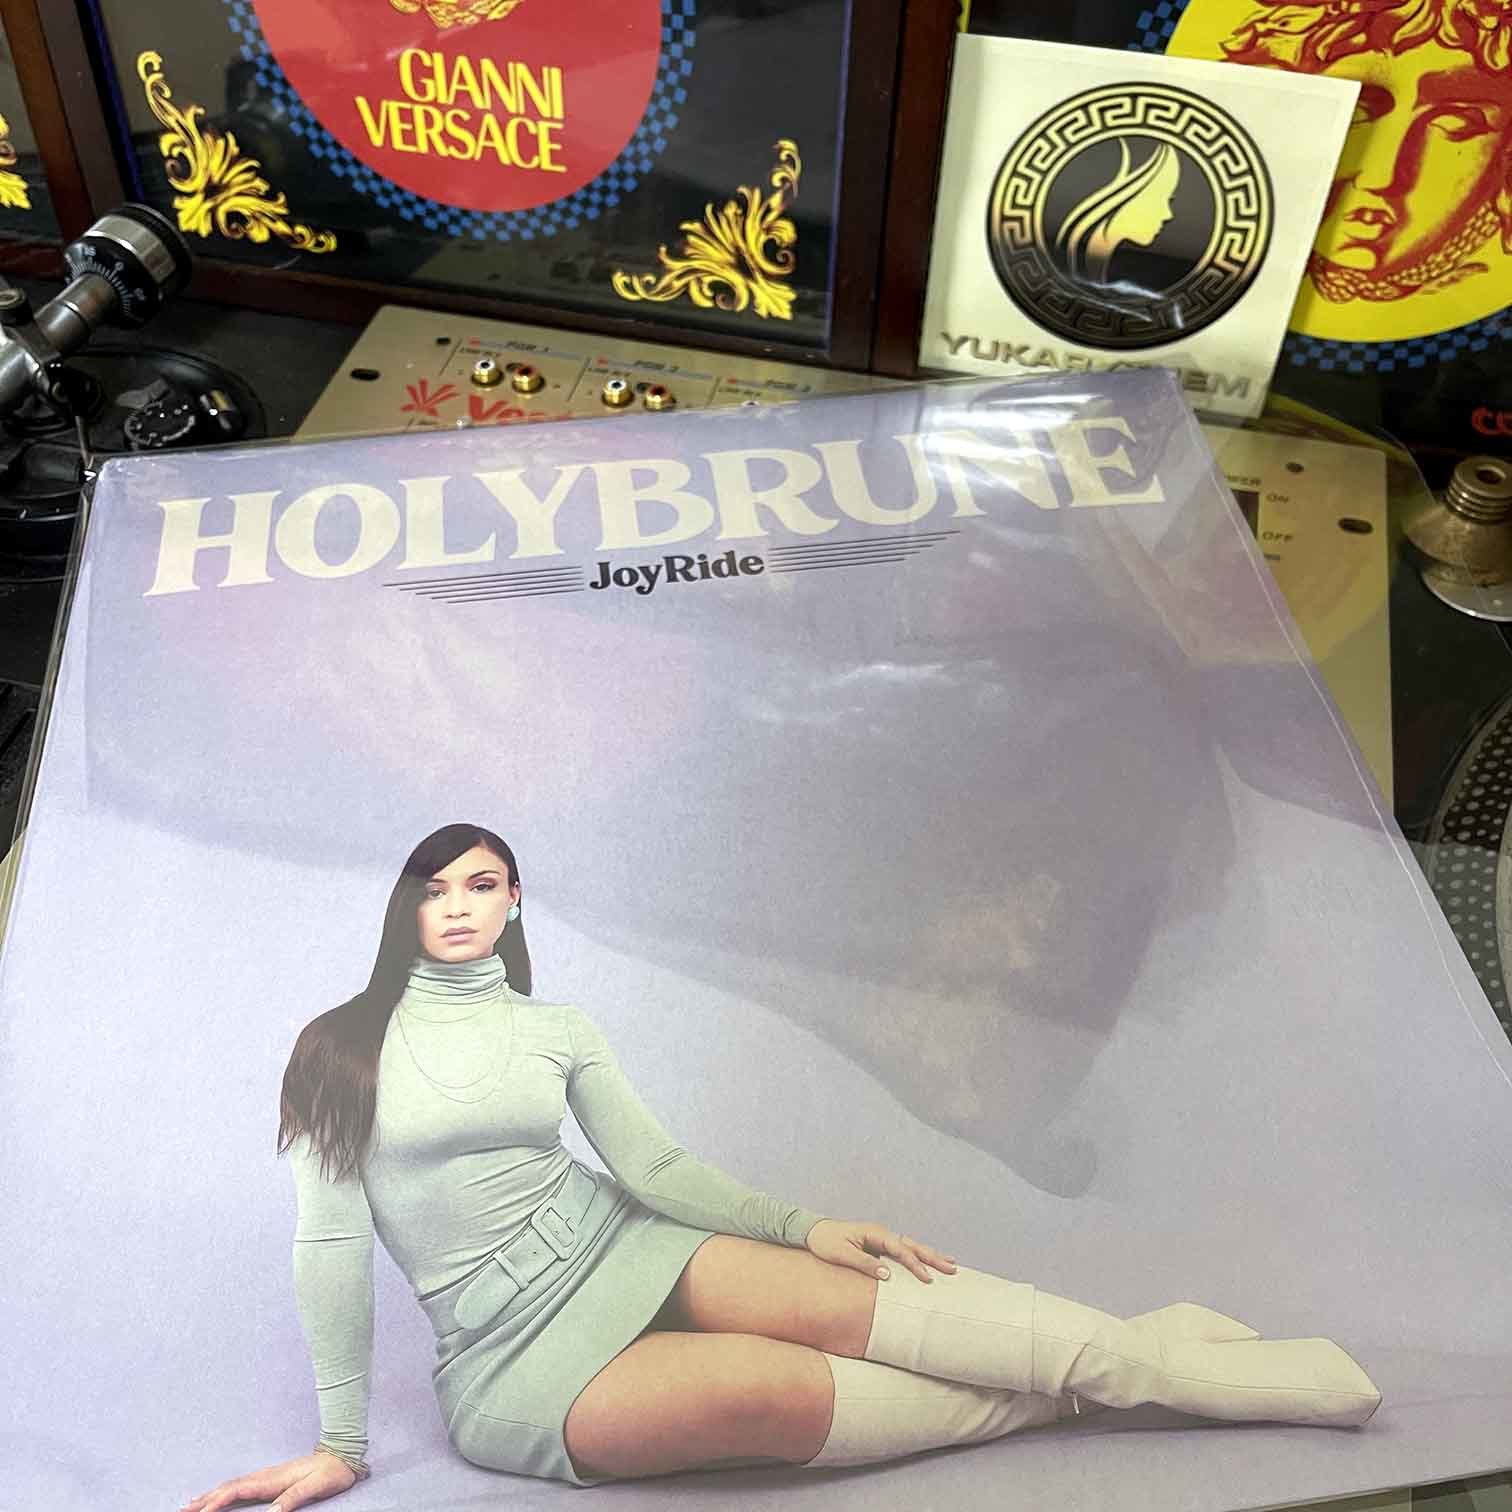 Holybrune – Joyride 00